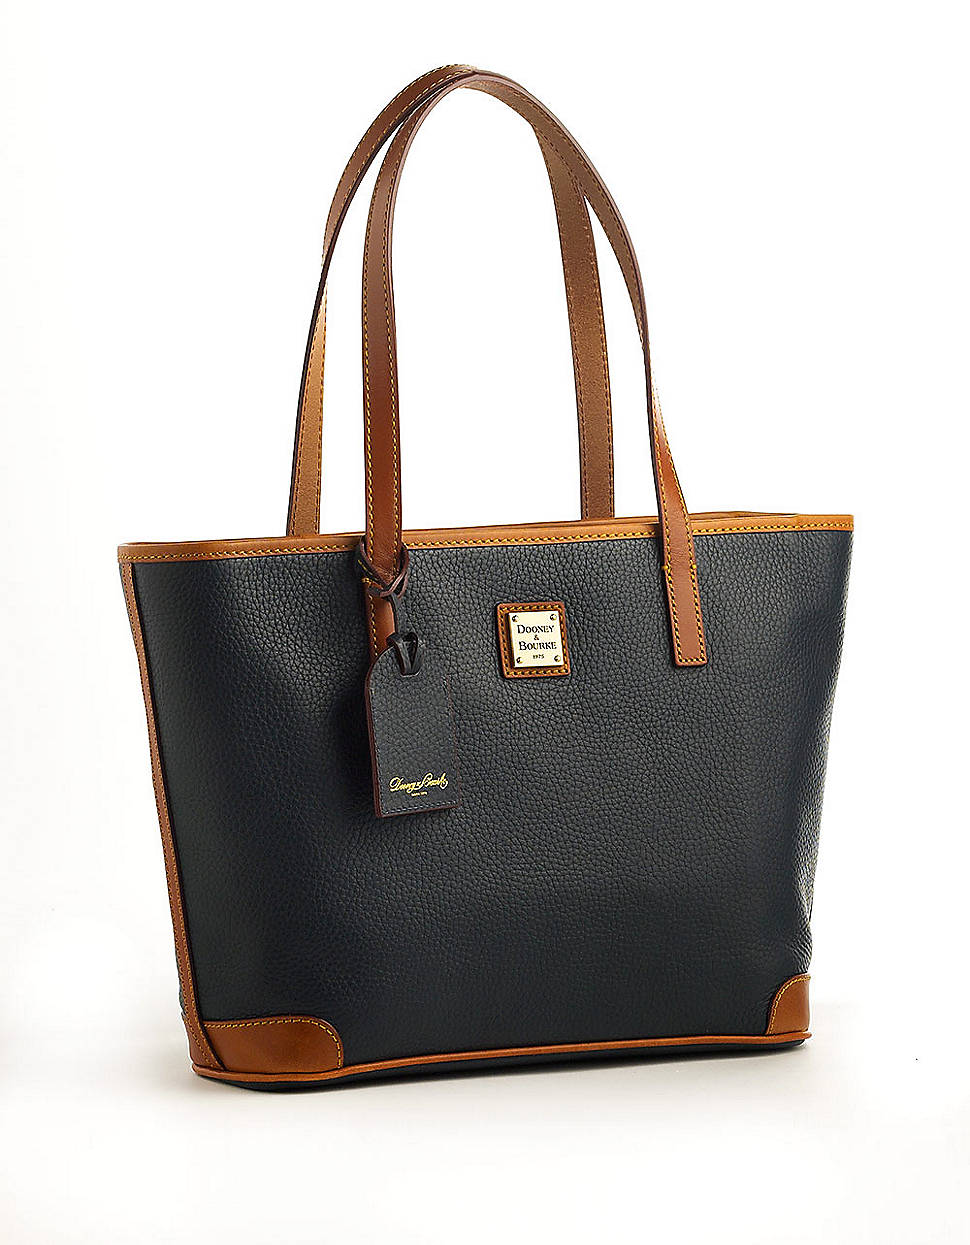 Dooney & Bourke Charleston Shopper Leather Tote Bag in Blue - Lyst